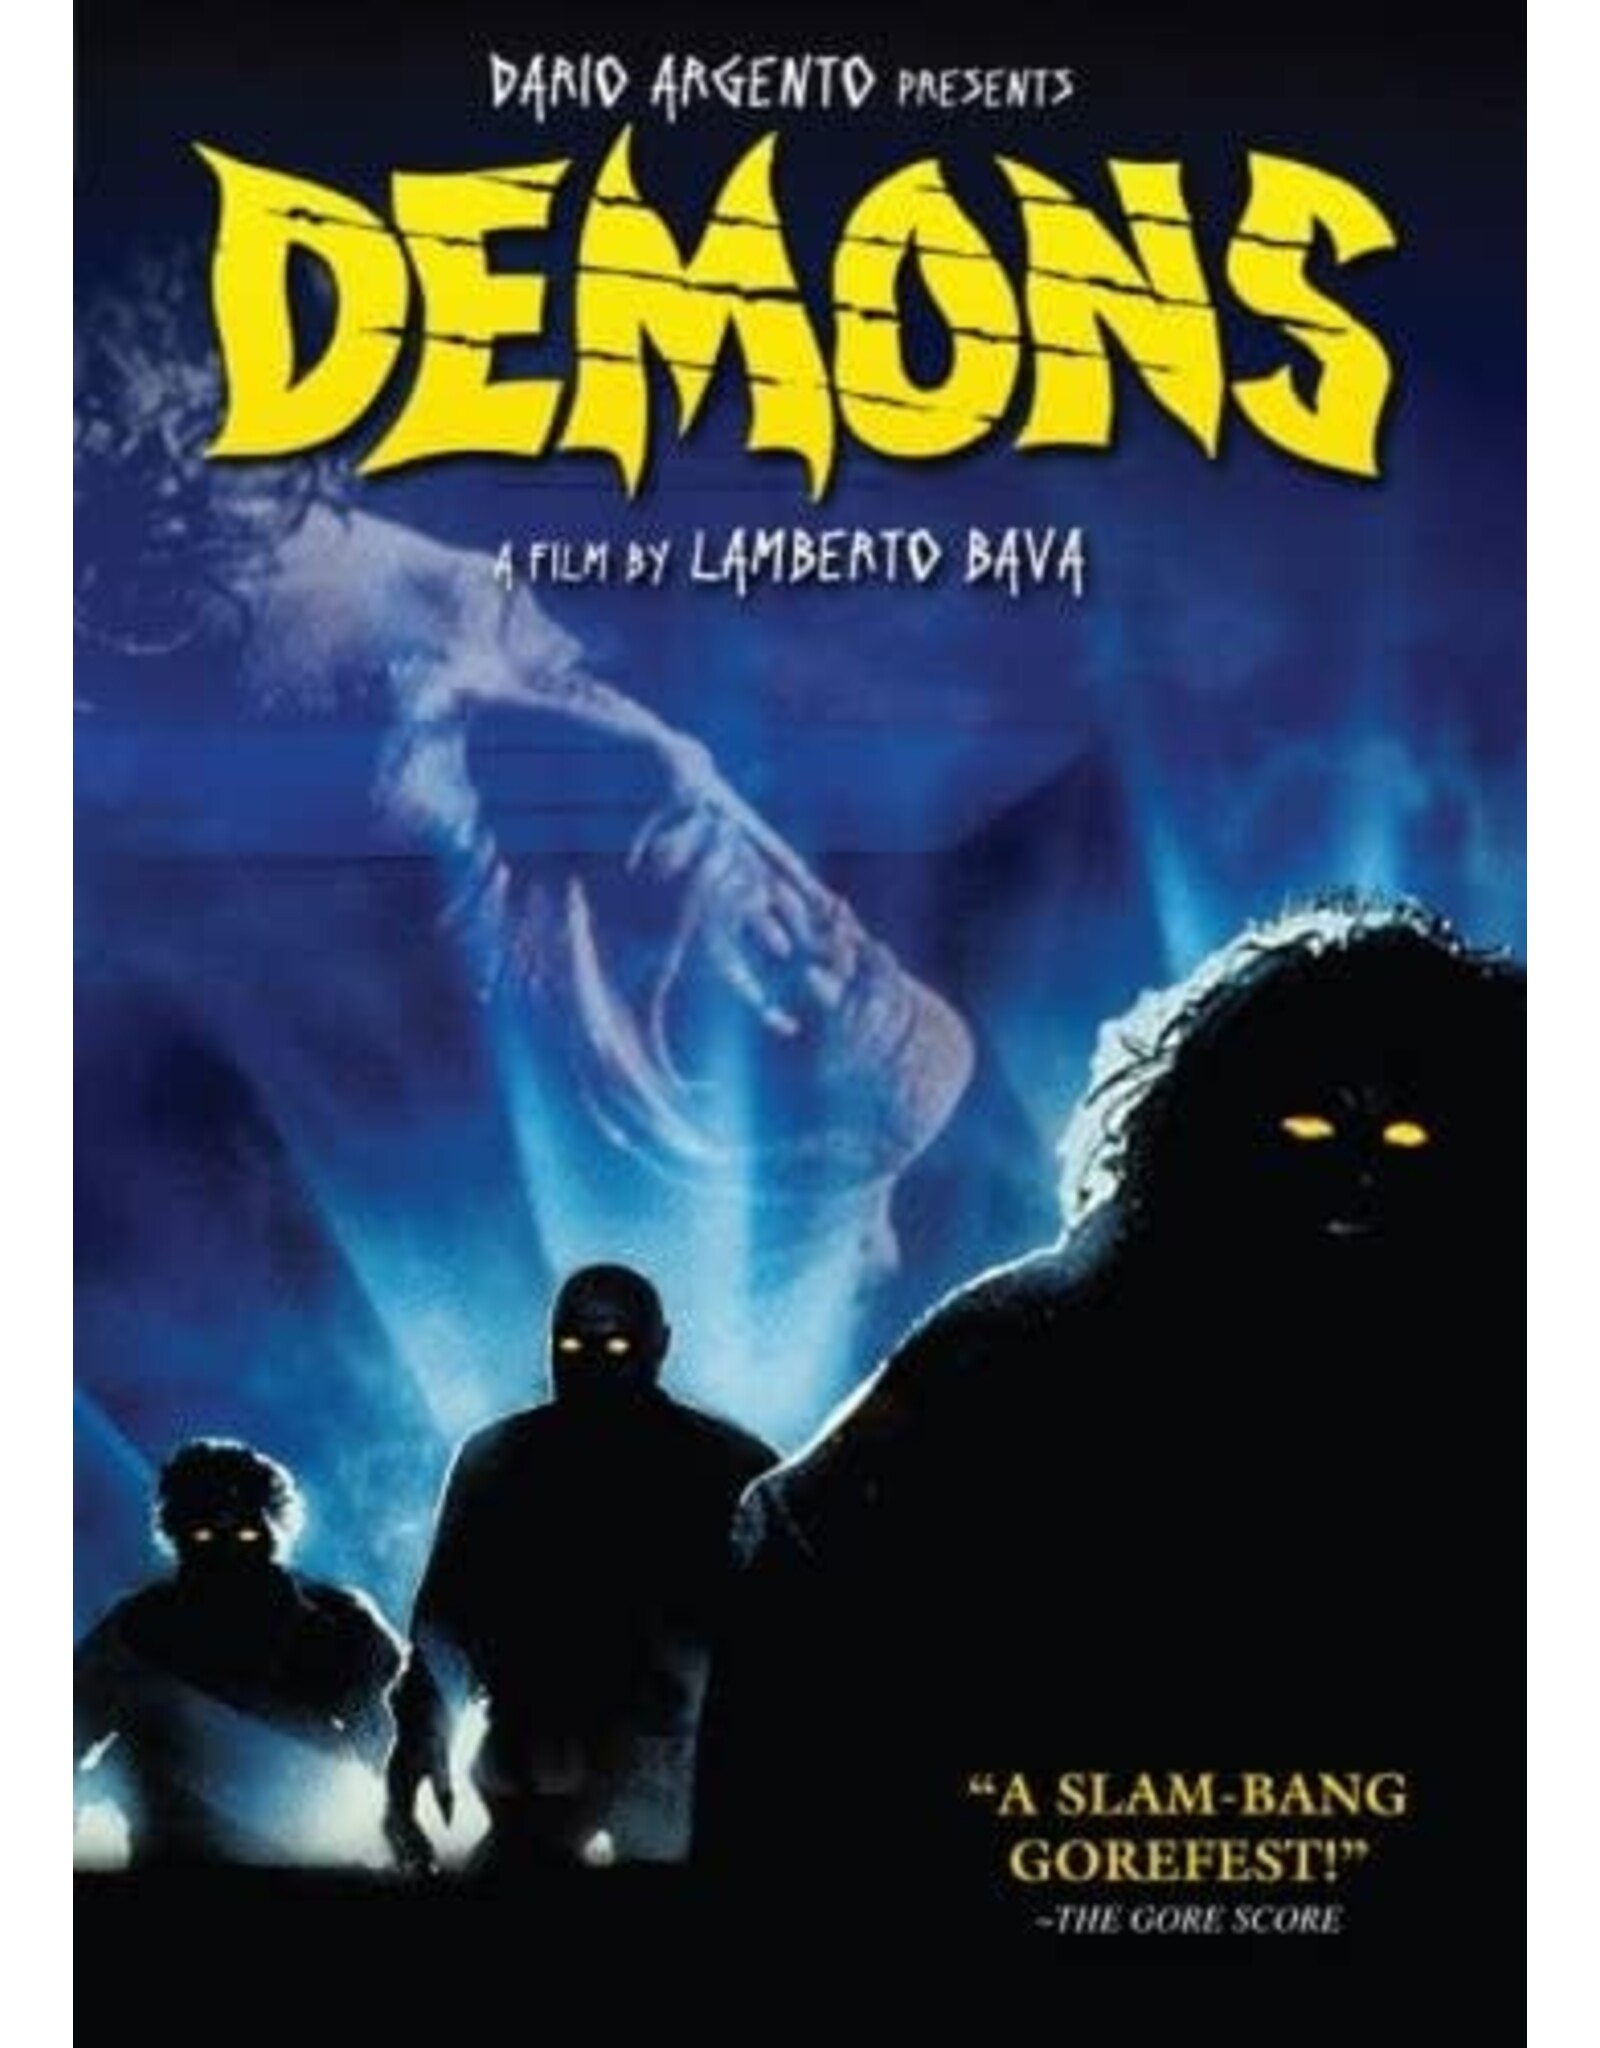 Horror Demons - Anchor Bay (Used)